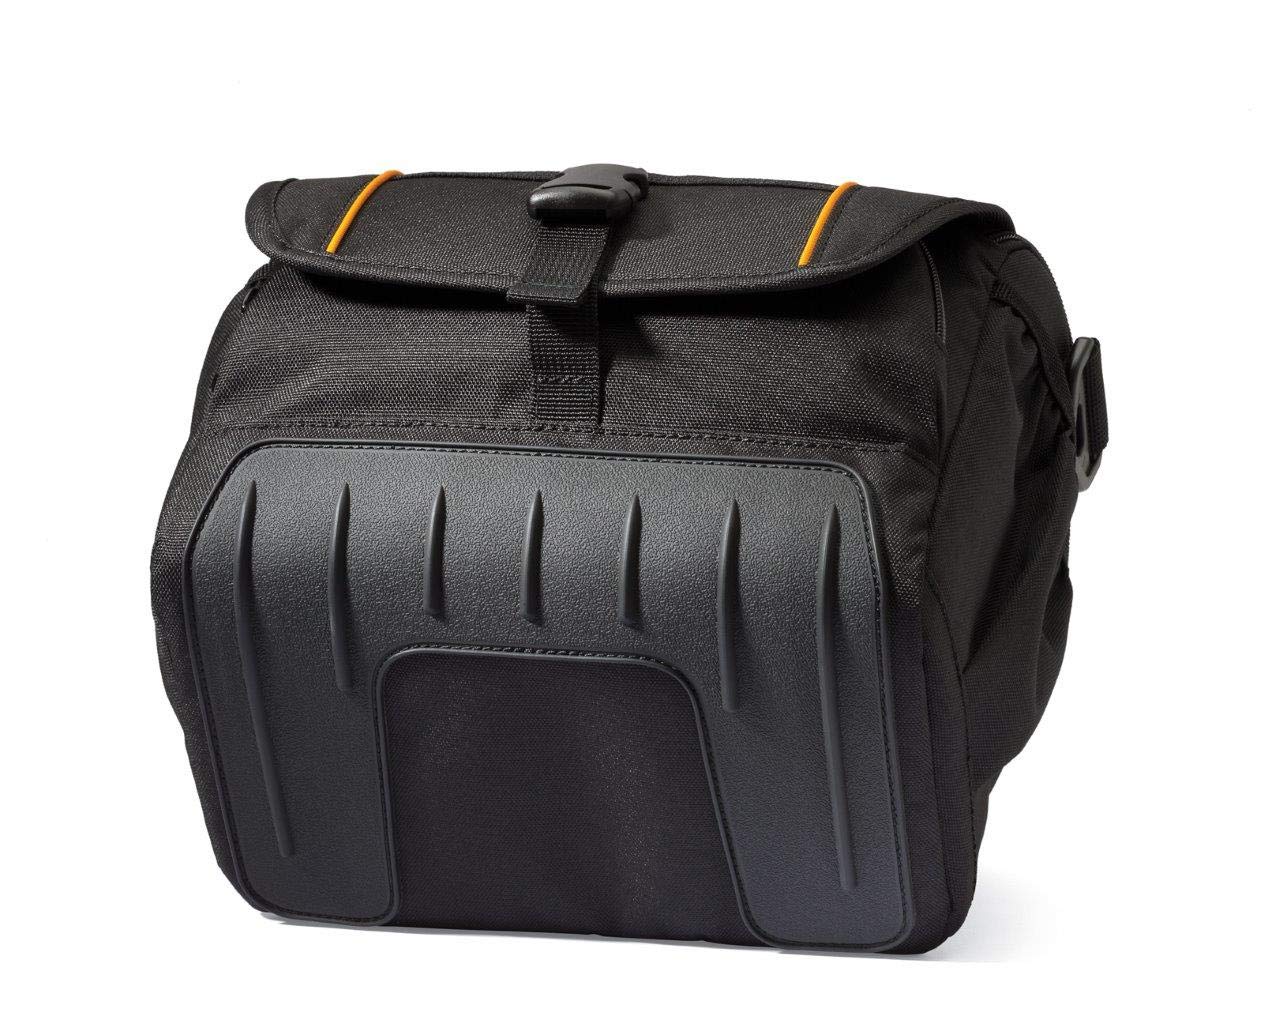 Lowepro Adventura Camera Shoulder Bag SH 160 II